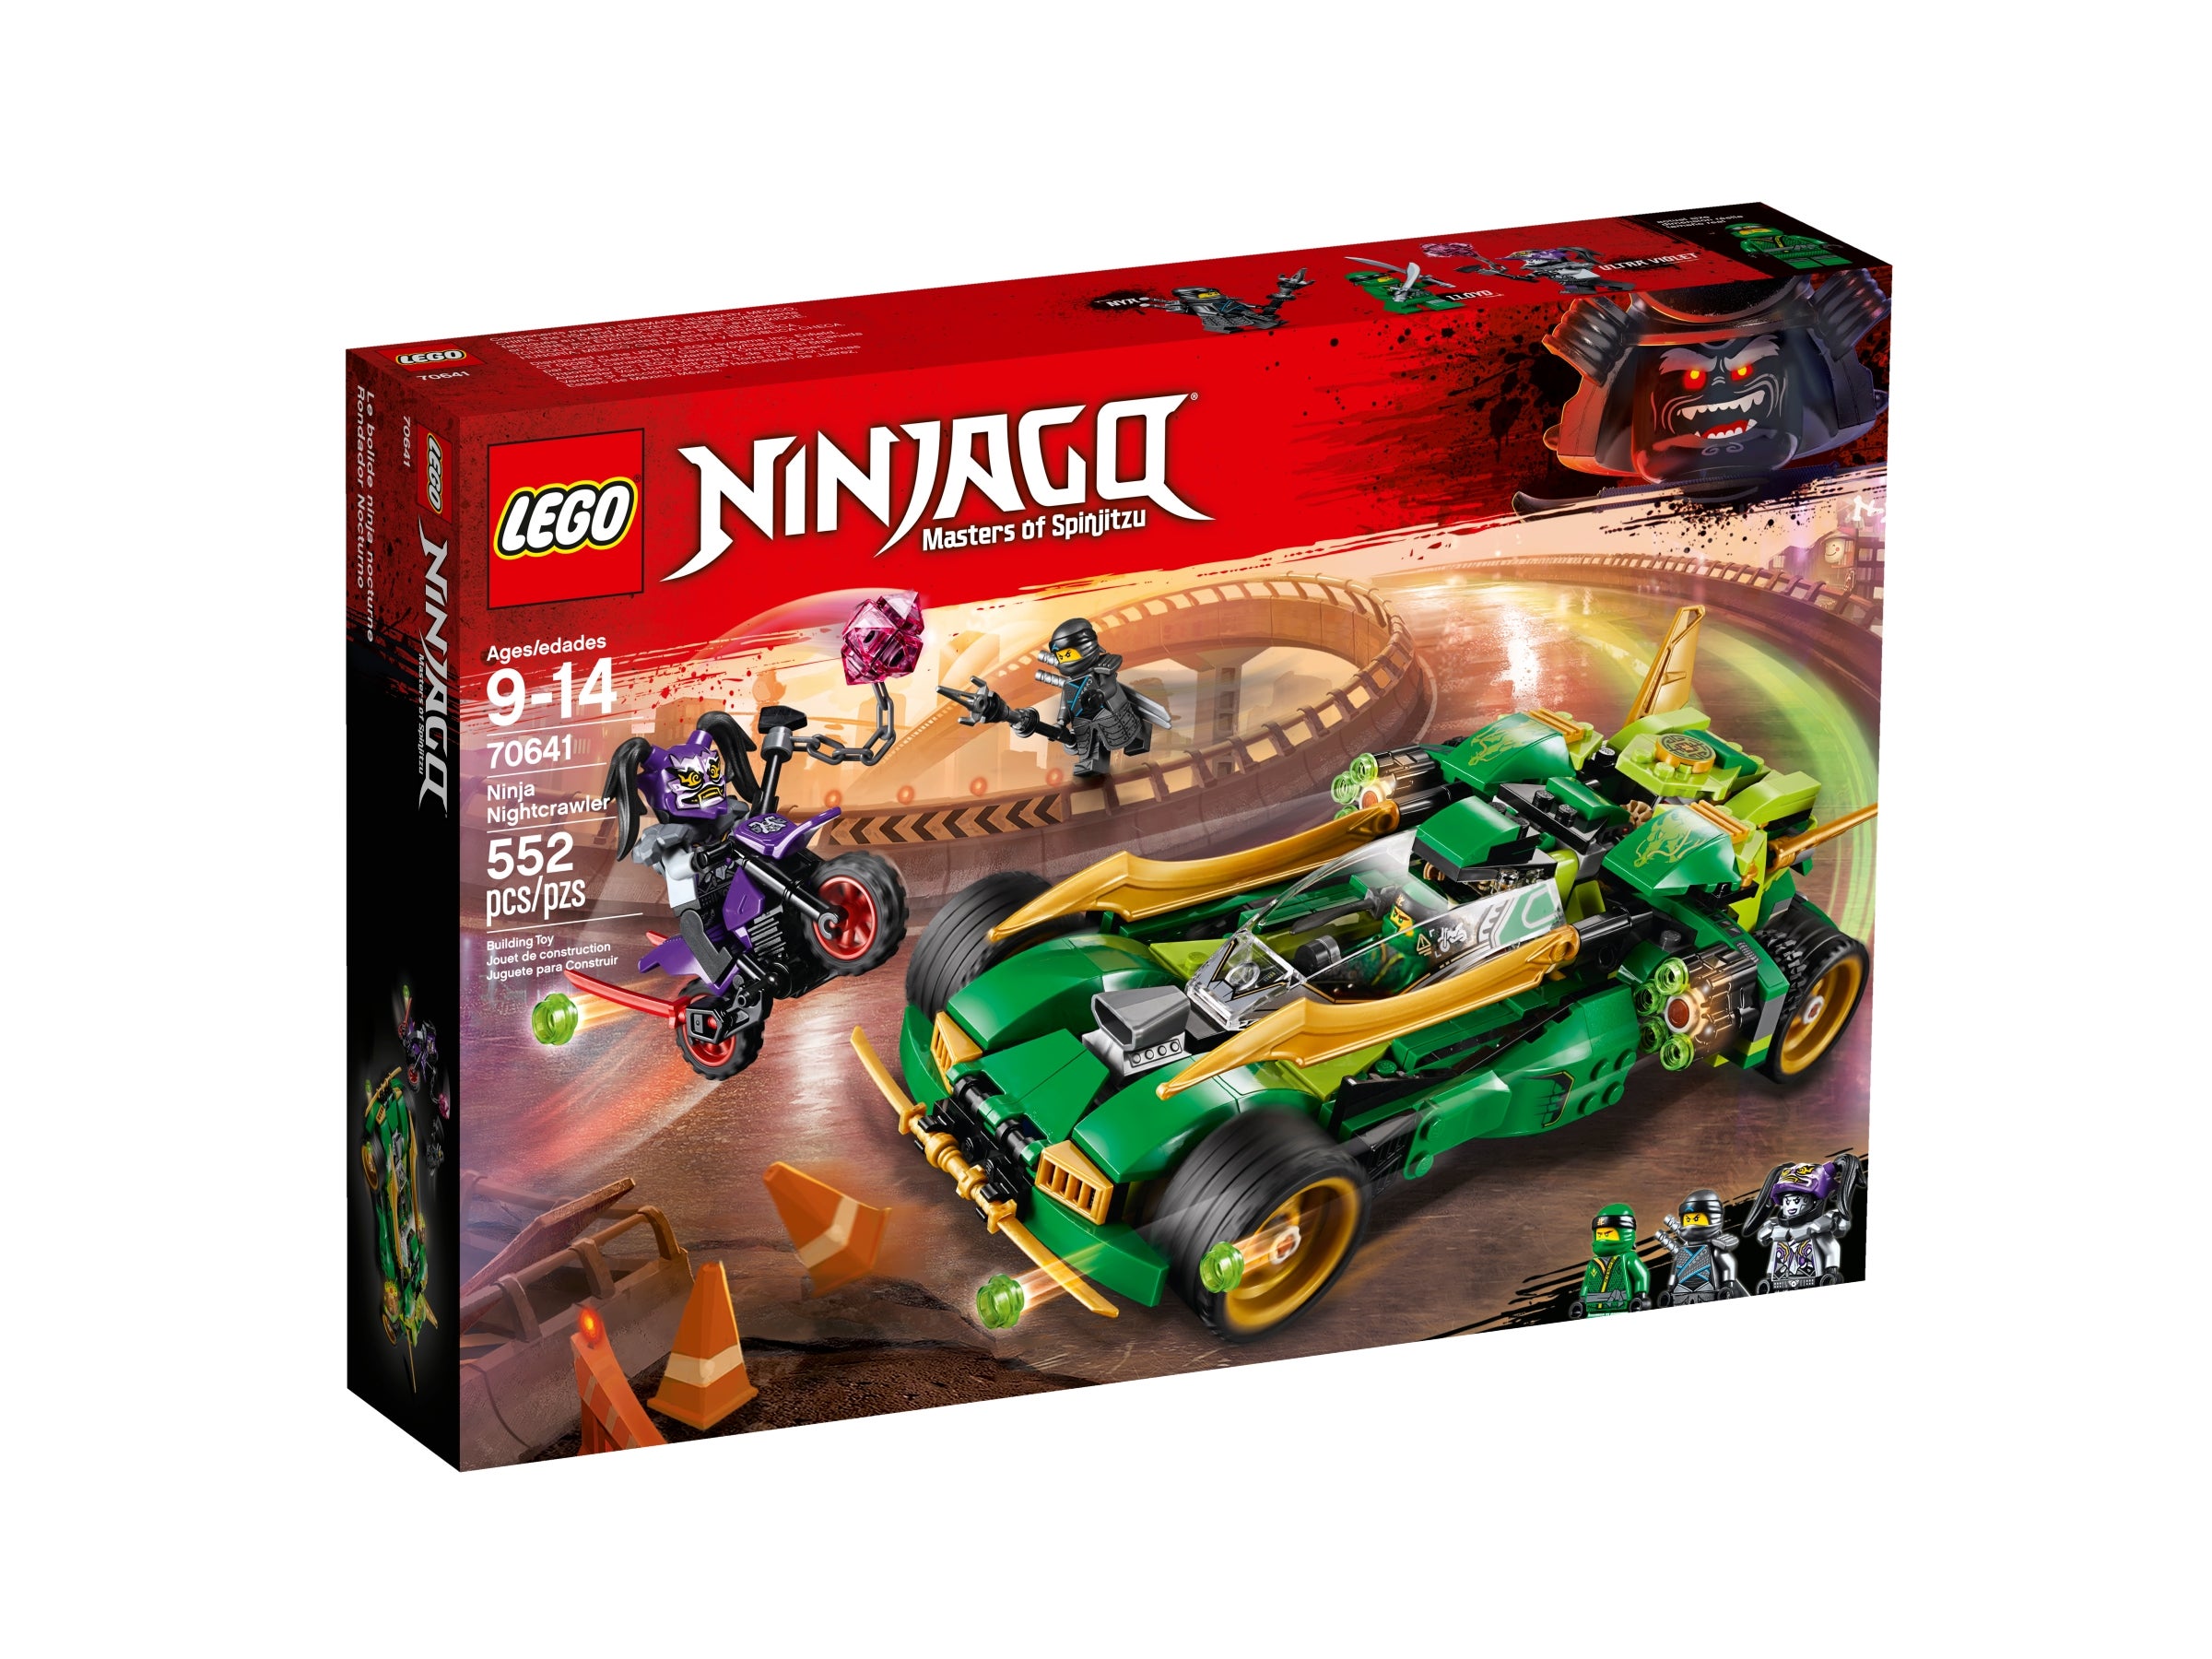 LEGO ® Ninjago ® 70641 Lloyds nuit speeder neuf new neuf dans sa boîte En parfait état dans sa boîte scellée